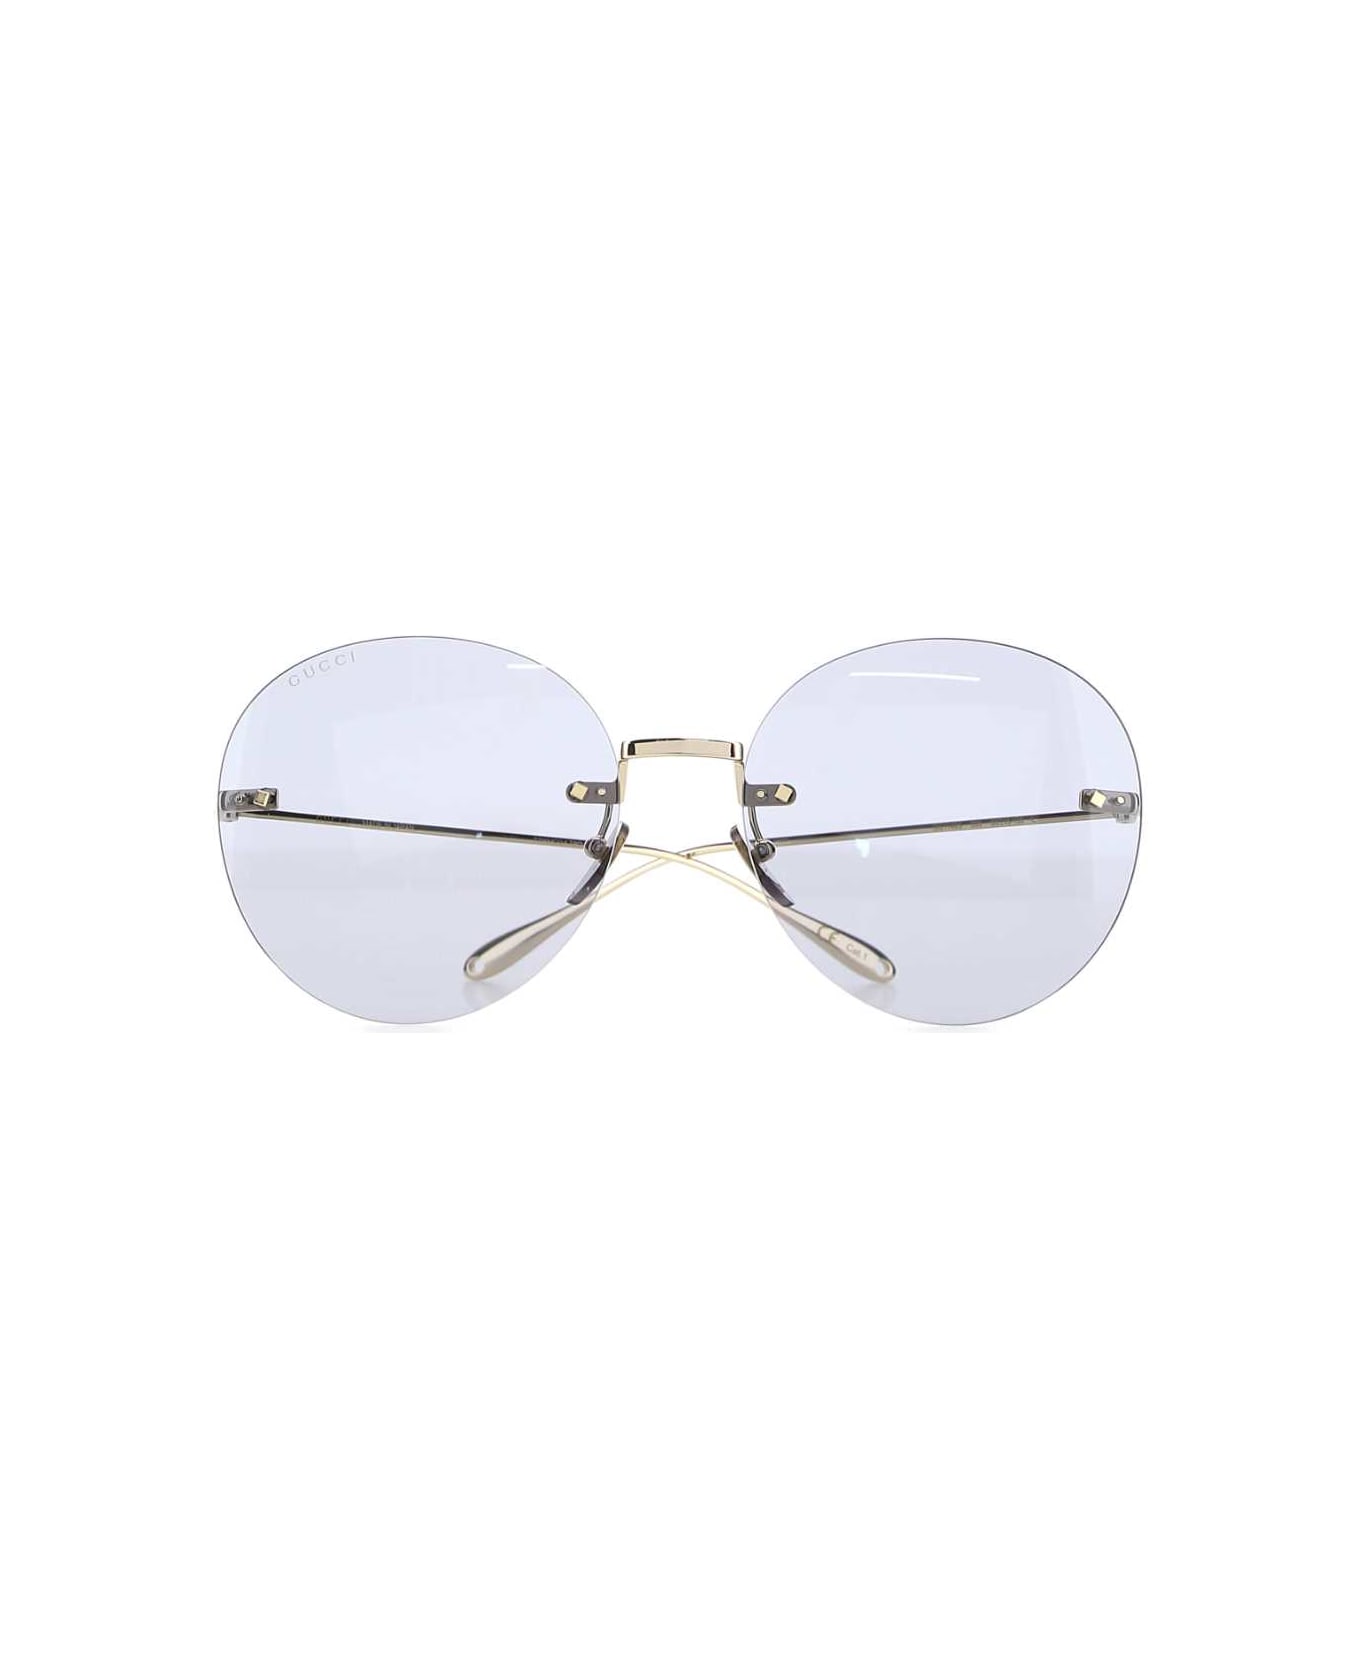 Gucci Gold Metal Sunglasses - 8053 サングラス